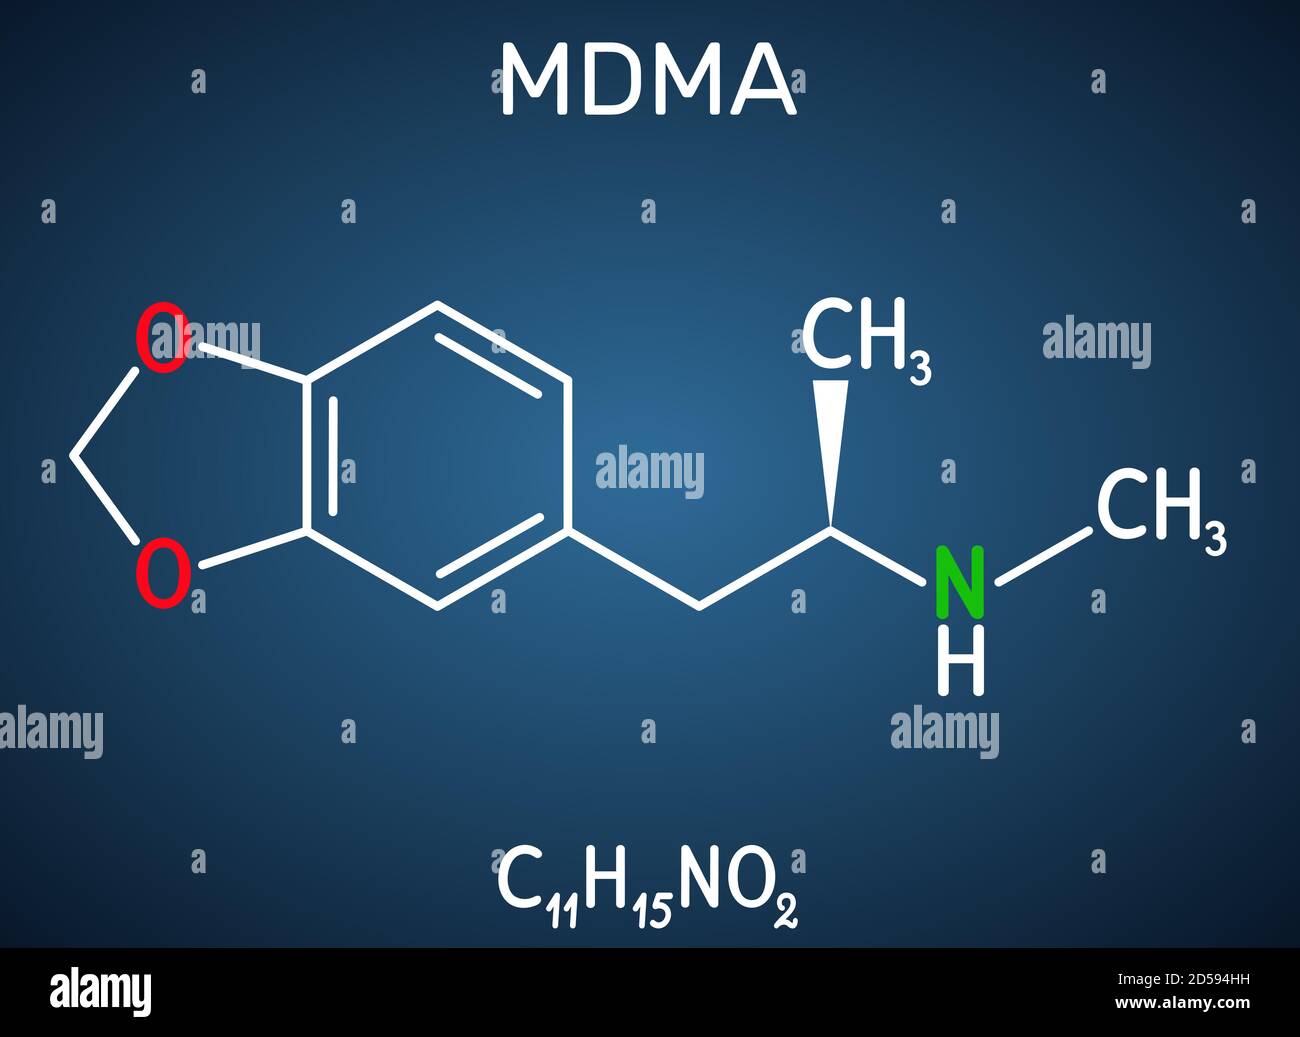 3,4-Methylendioxymethamphetamin, MDMA, XTC, Ecstasy-Molekül. Es ist psychoaktive, halluzinogene Droge. Strukturelle chemische Formel auf der dunkelblauen BA Stock Vektor